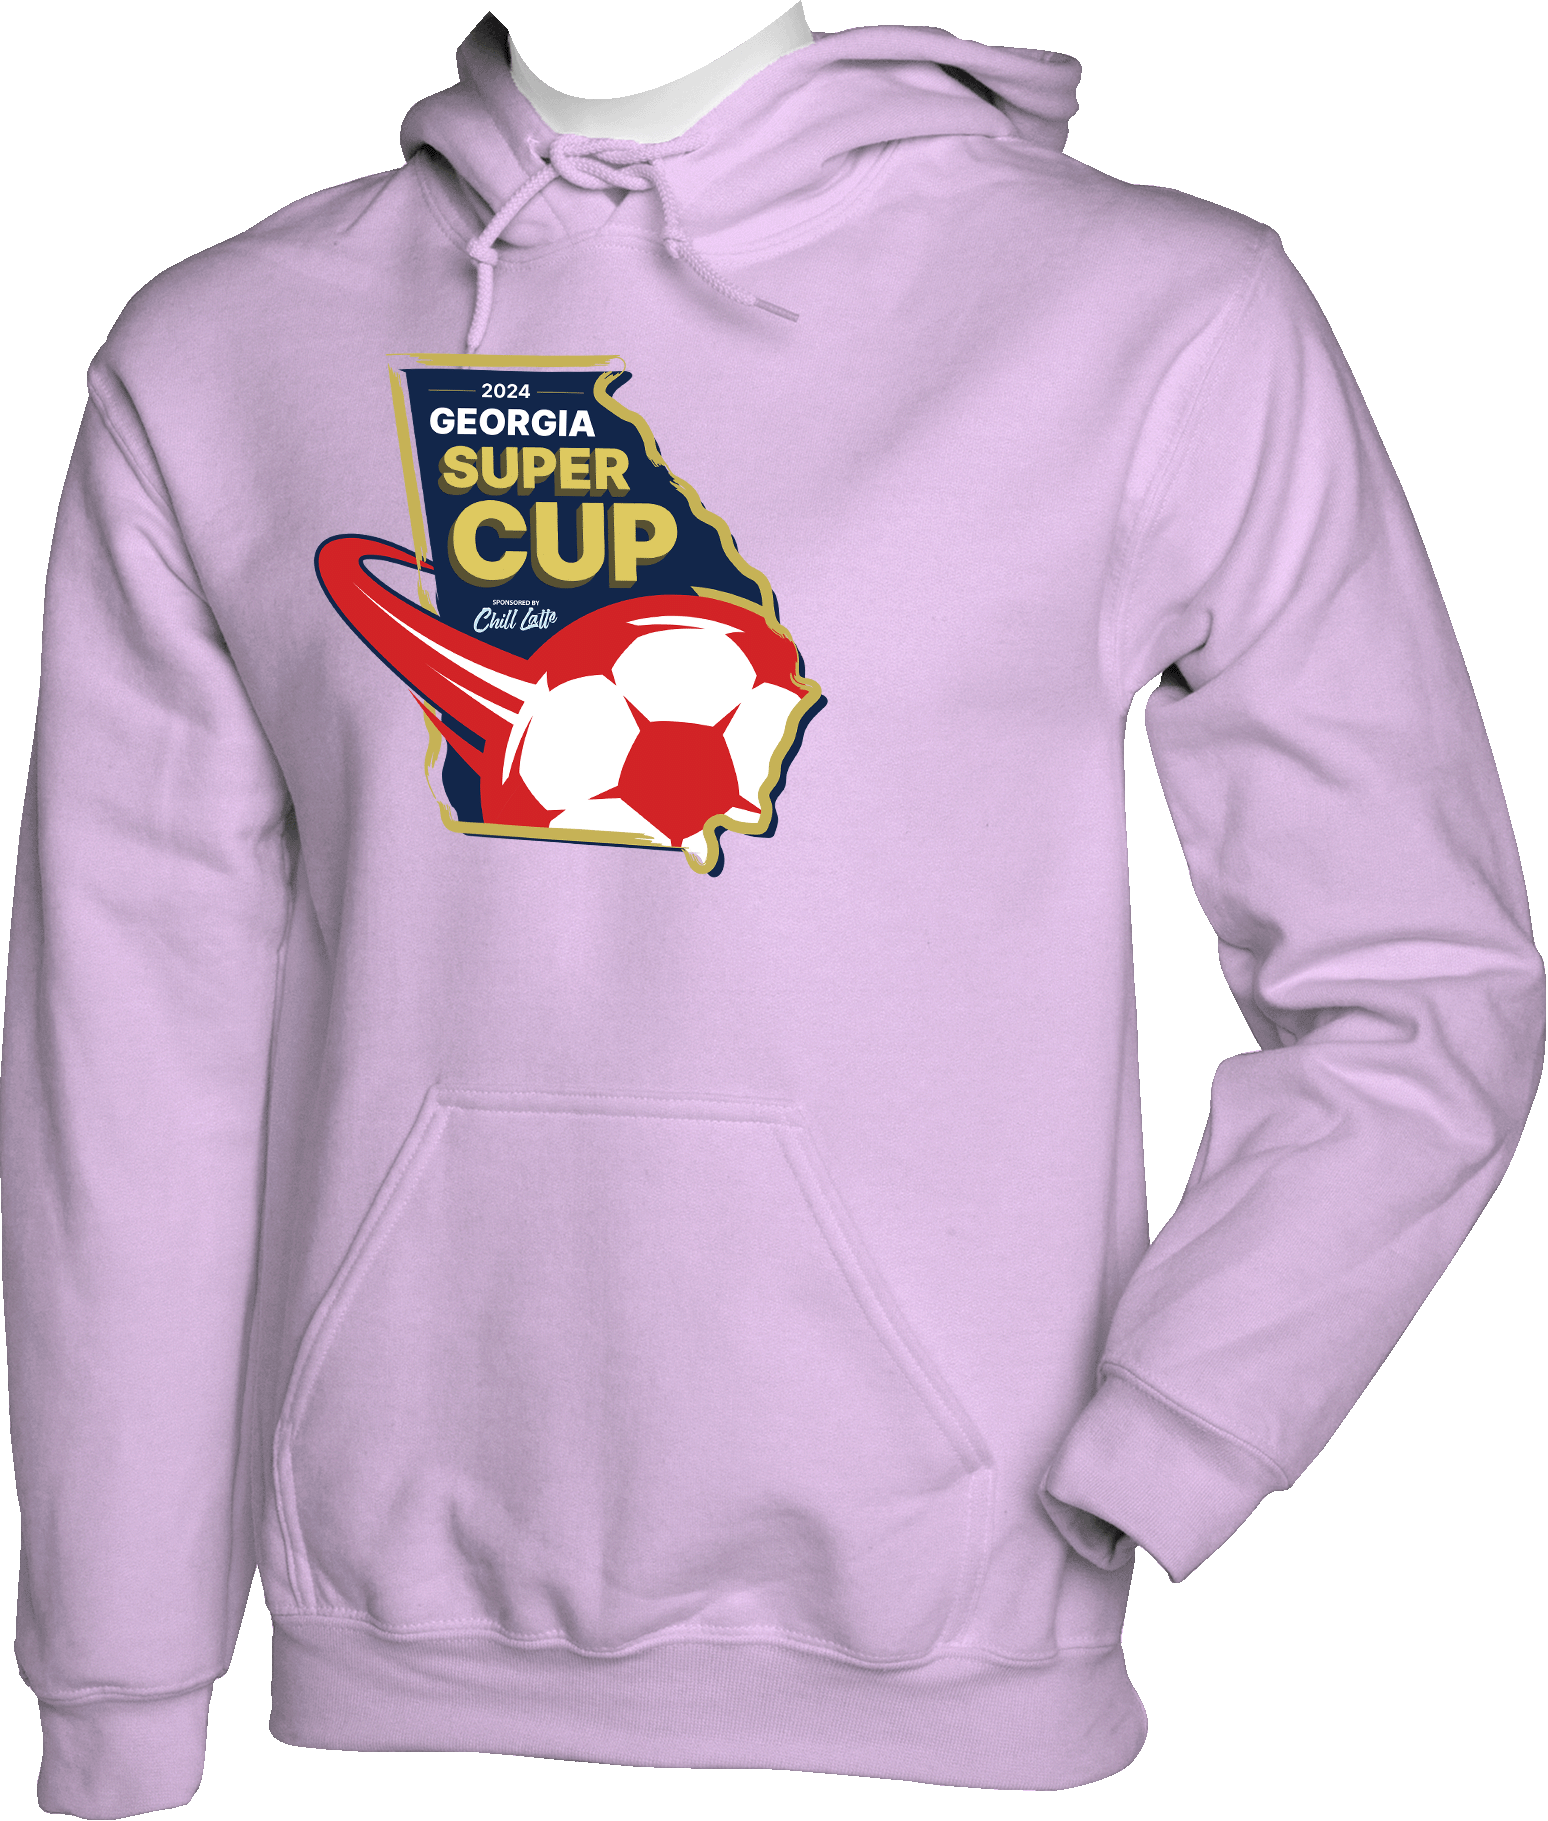 Hoodies - 2024 Georgia Super Cup